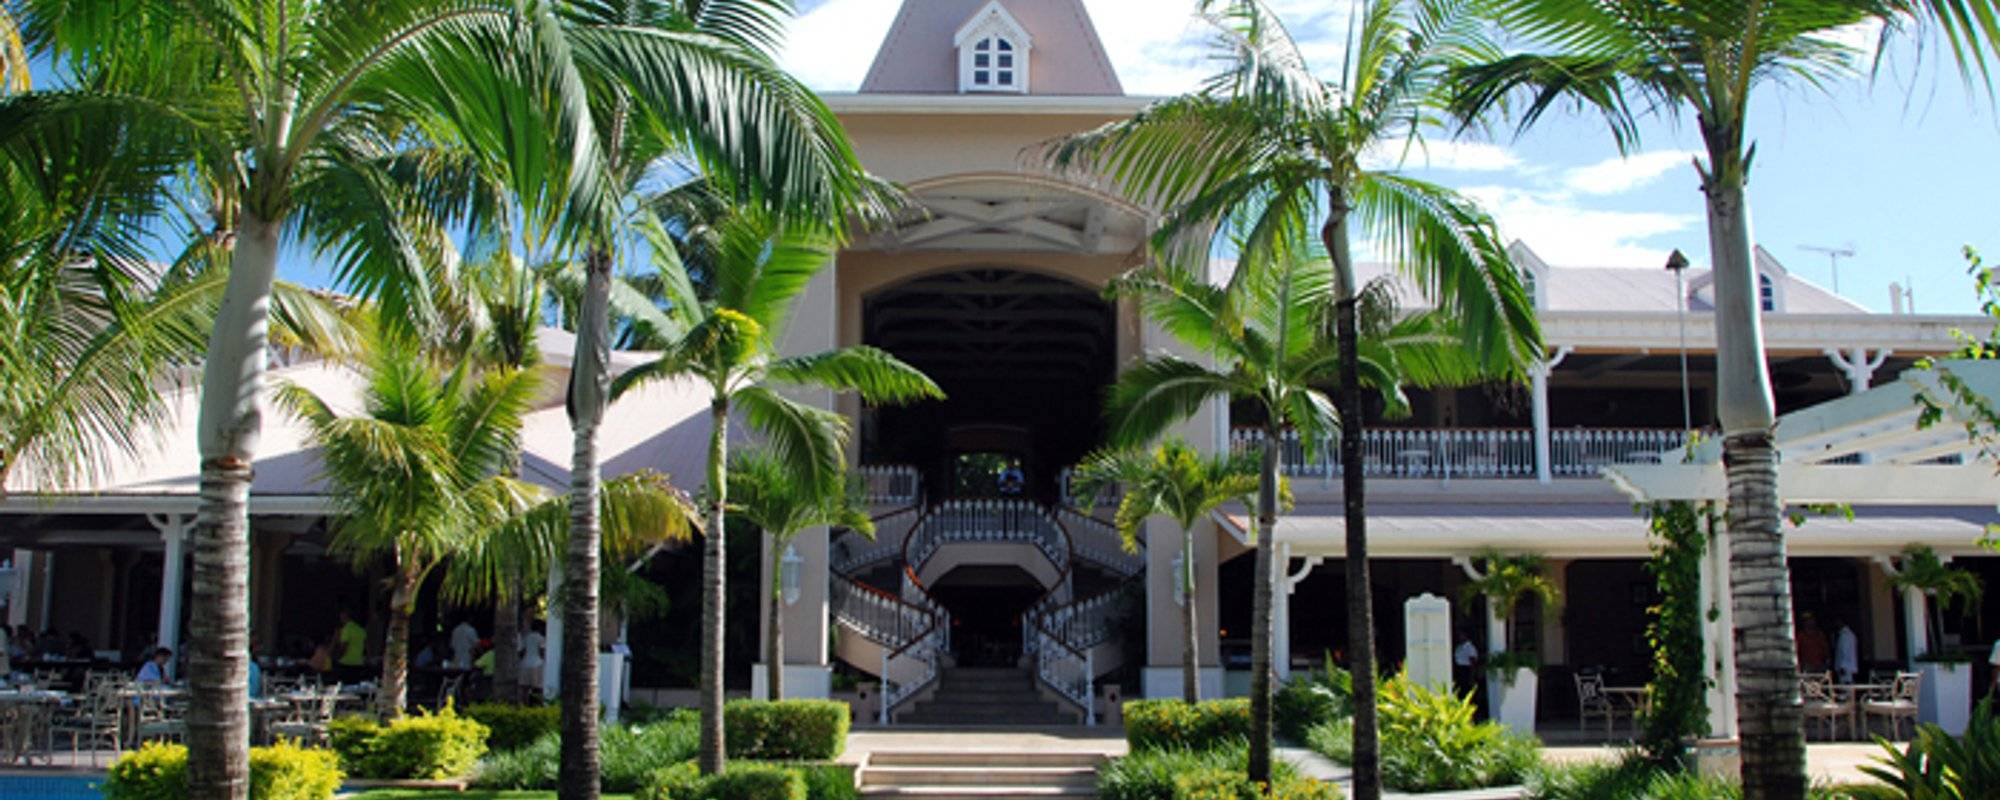 Sugar Beach hotel on the island of Mauritius